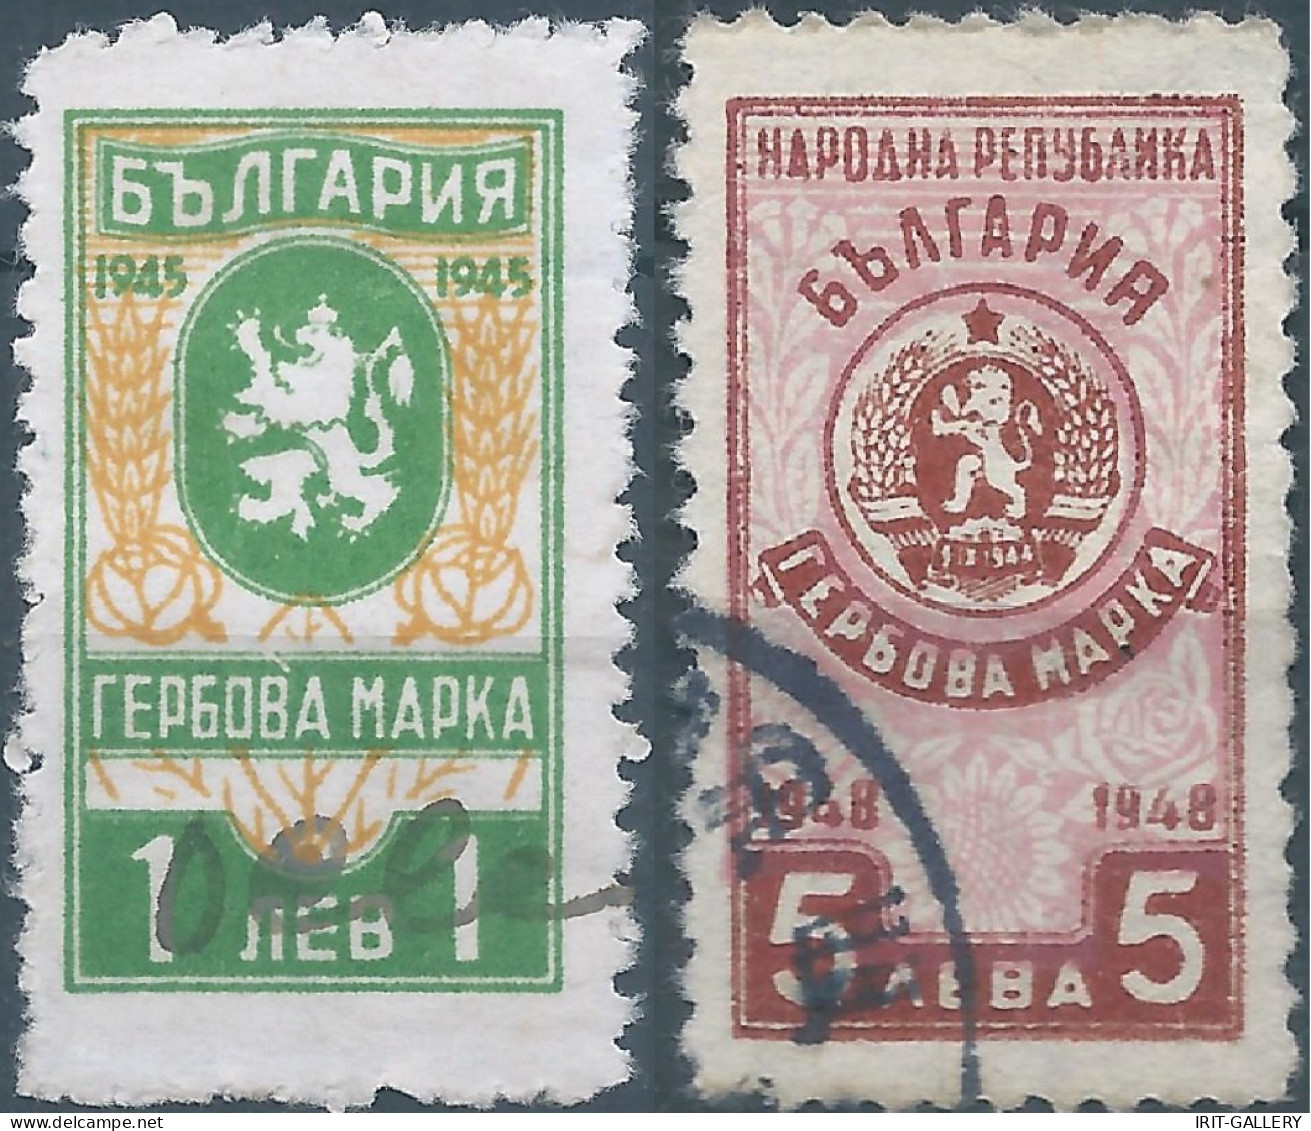 Bulgaria - Bulgarien - Bulgare,1945 - 1948 Revenue Stamps Fiscal Tax,Obliterated - Dienstzegels